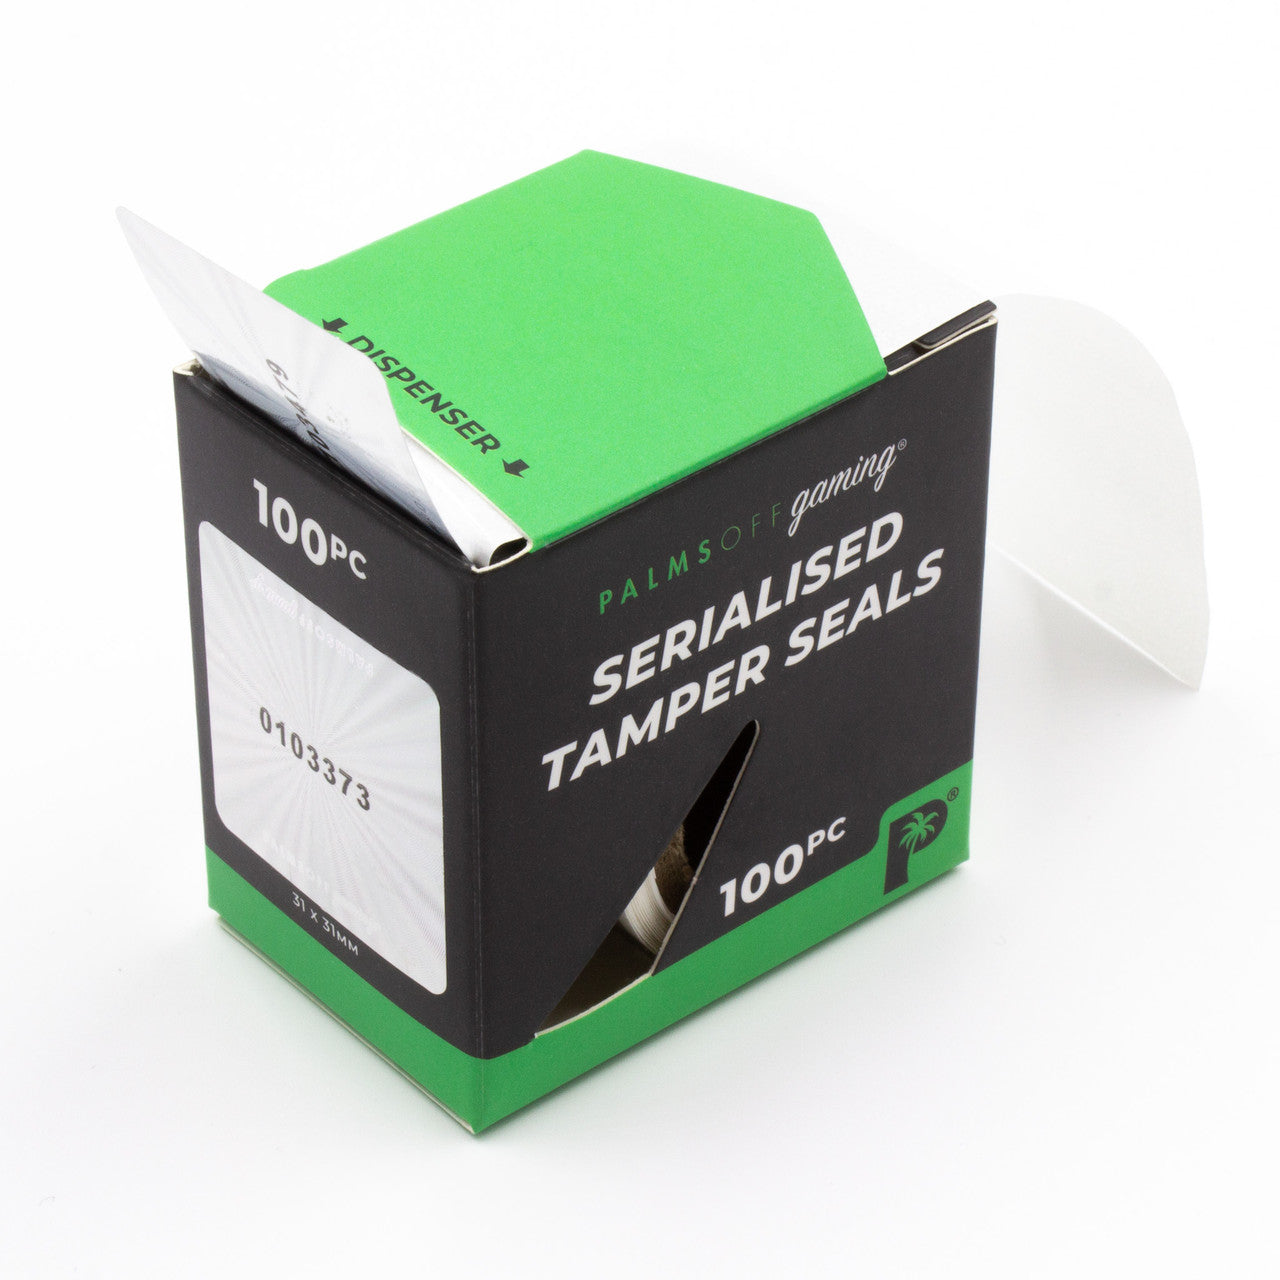 Serialised Tamper Seals - 100pc Box